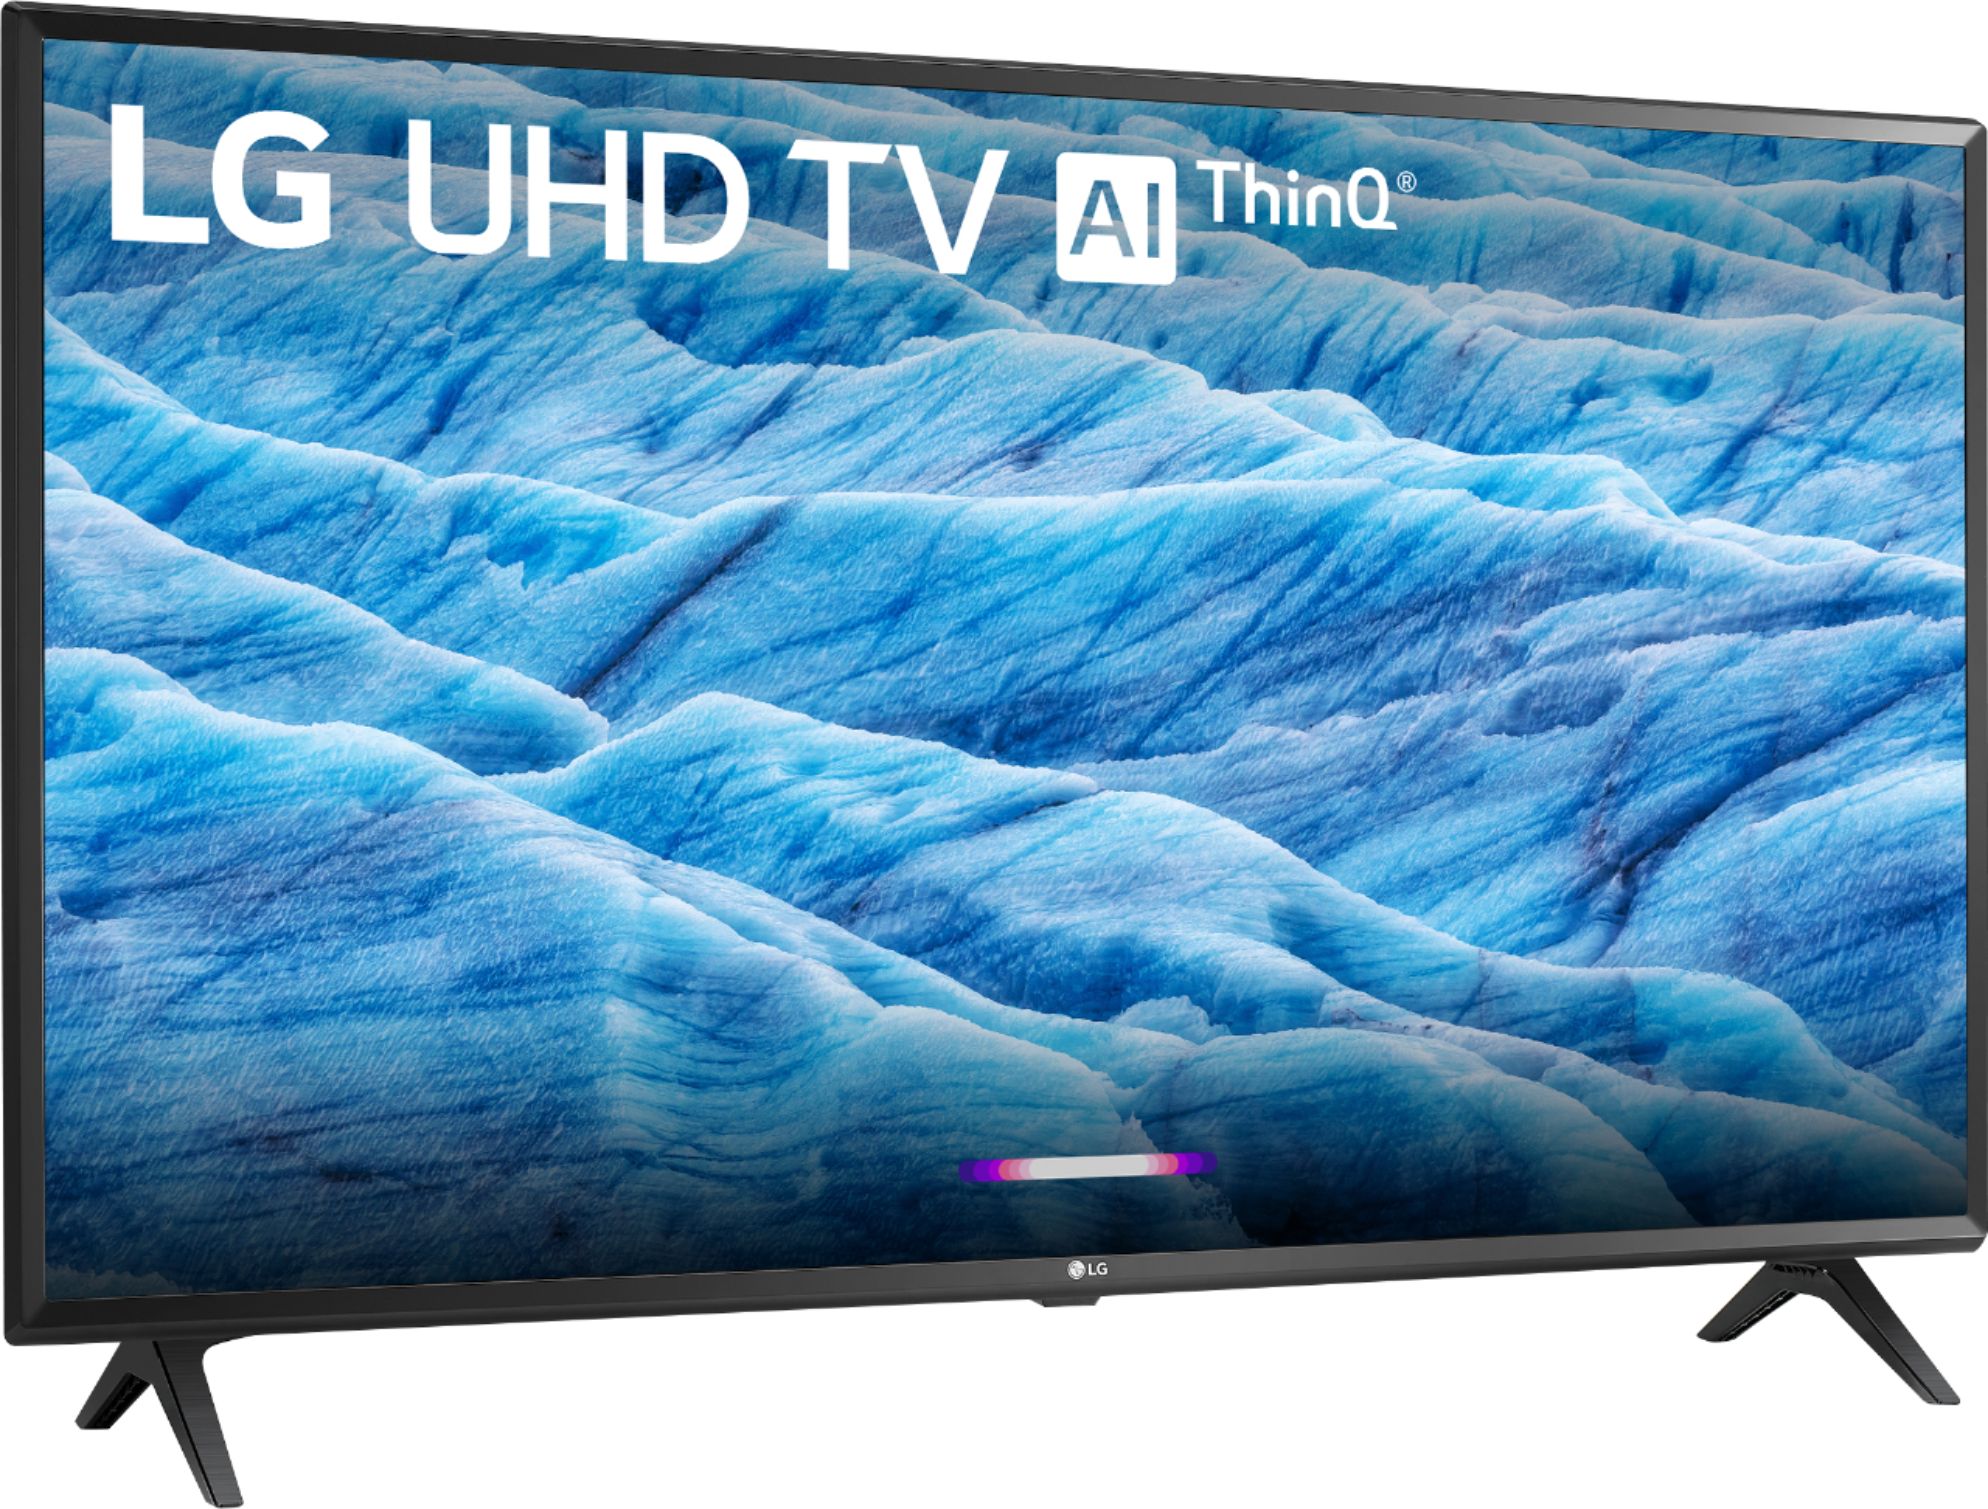 LG LED UM7300PUA Series 2160p 4K UHD TV with 49UM7300PUA - Best Buy